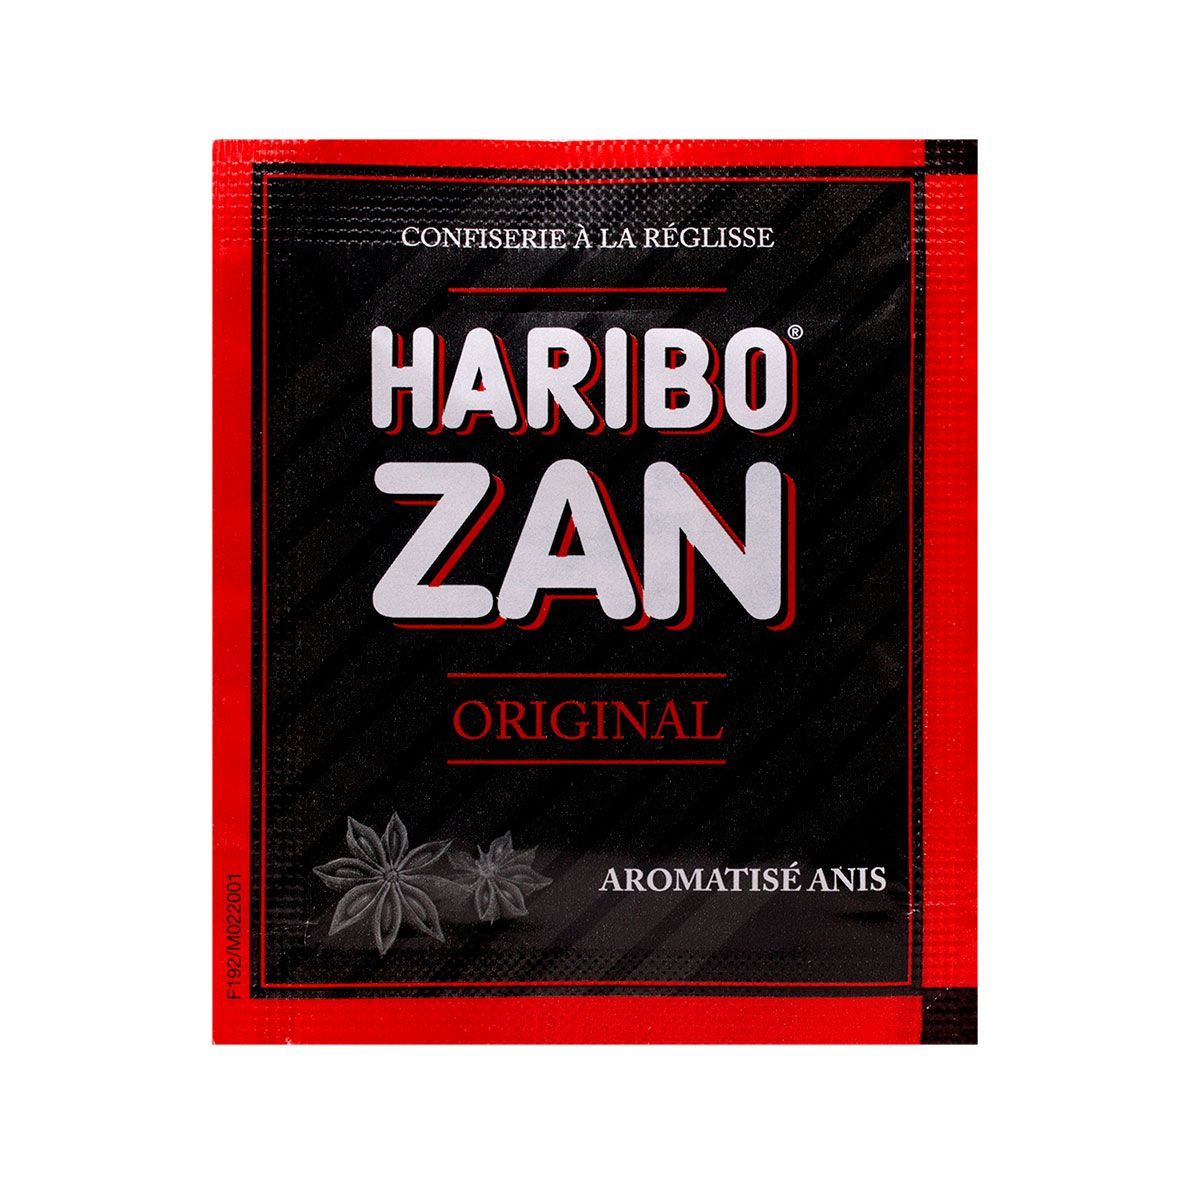 Vente grossiste confiserie PAINS ZAN ANIS MENTHE (12 G) HARIBO -60 pains